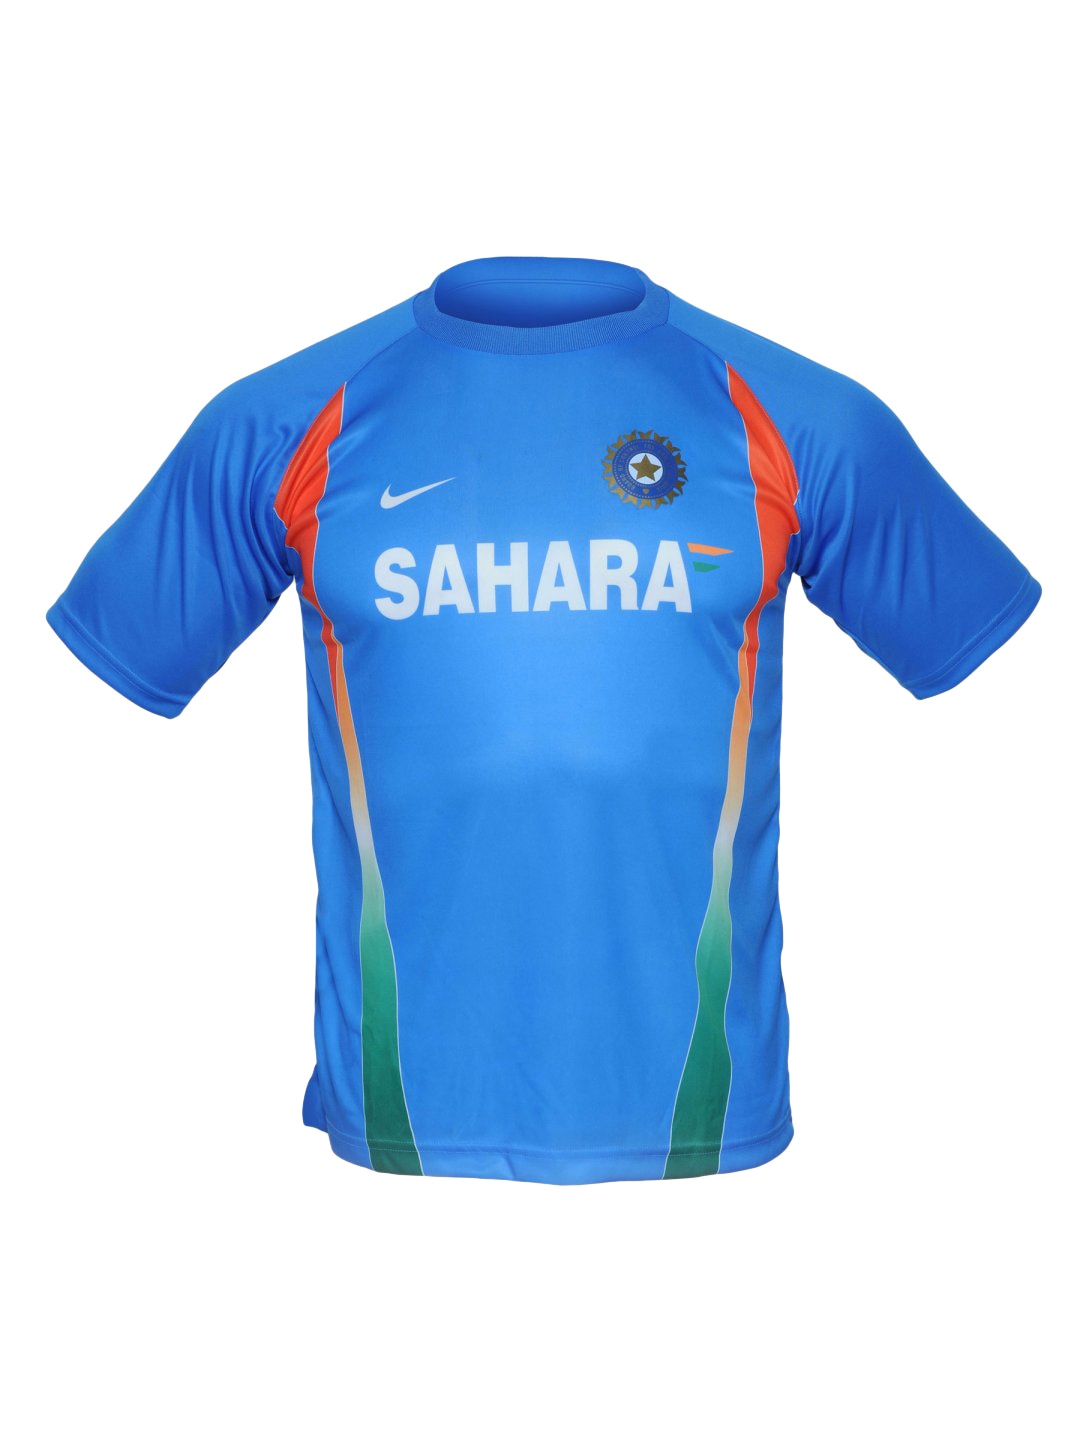 Nike Sahara Team India Fanwear Round Neck Jersey